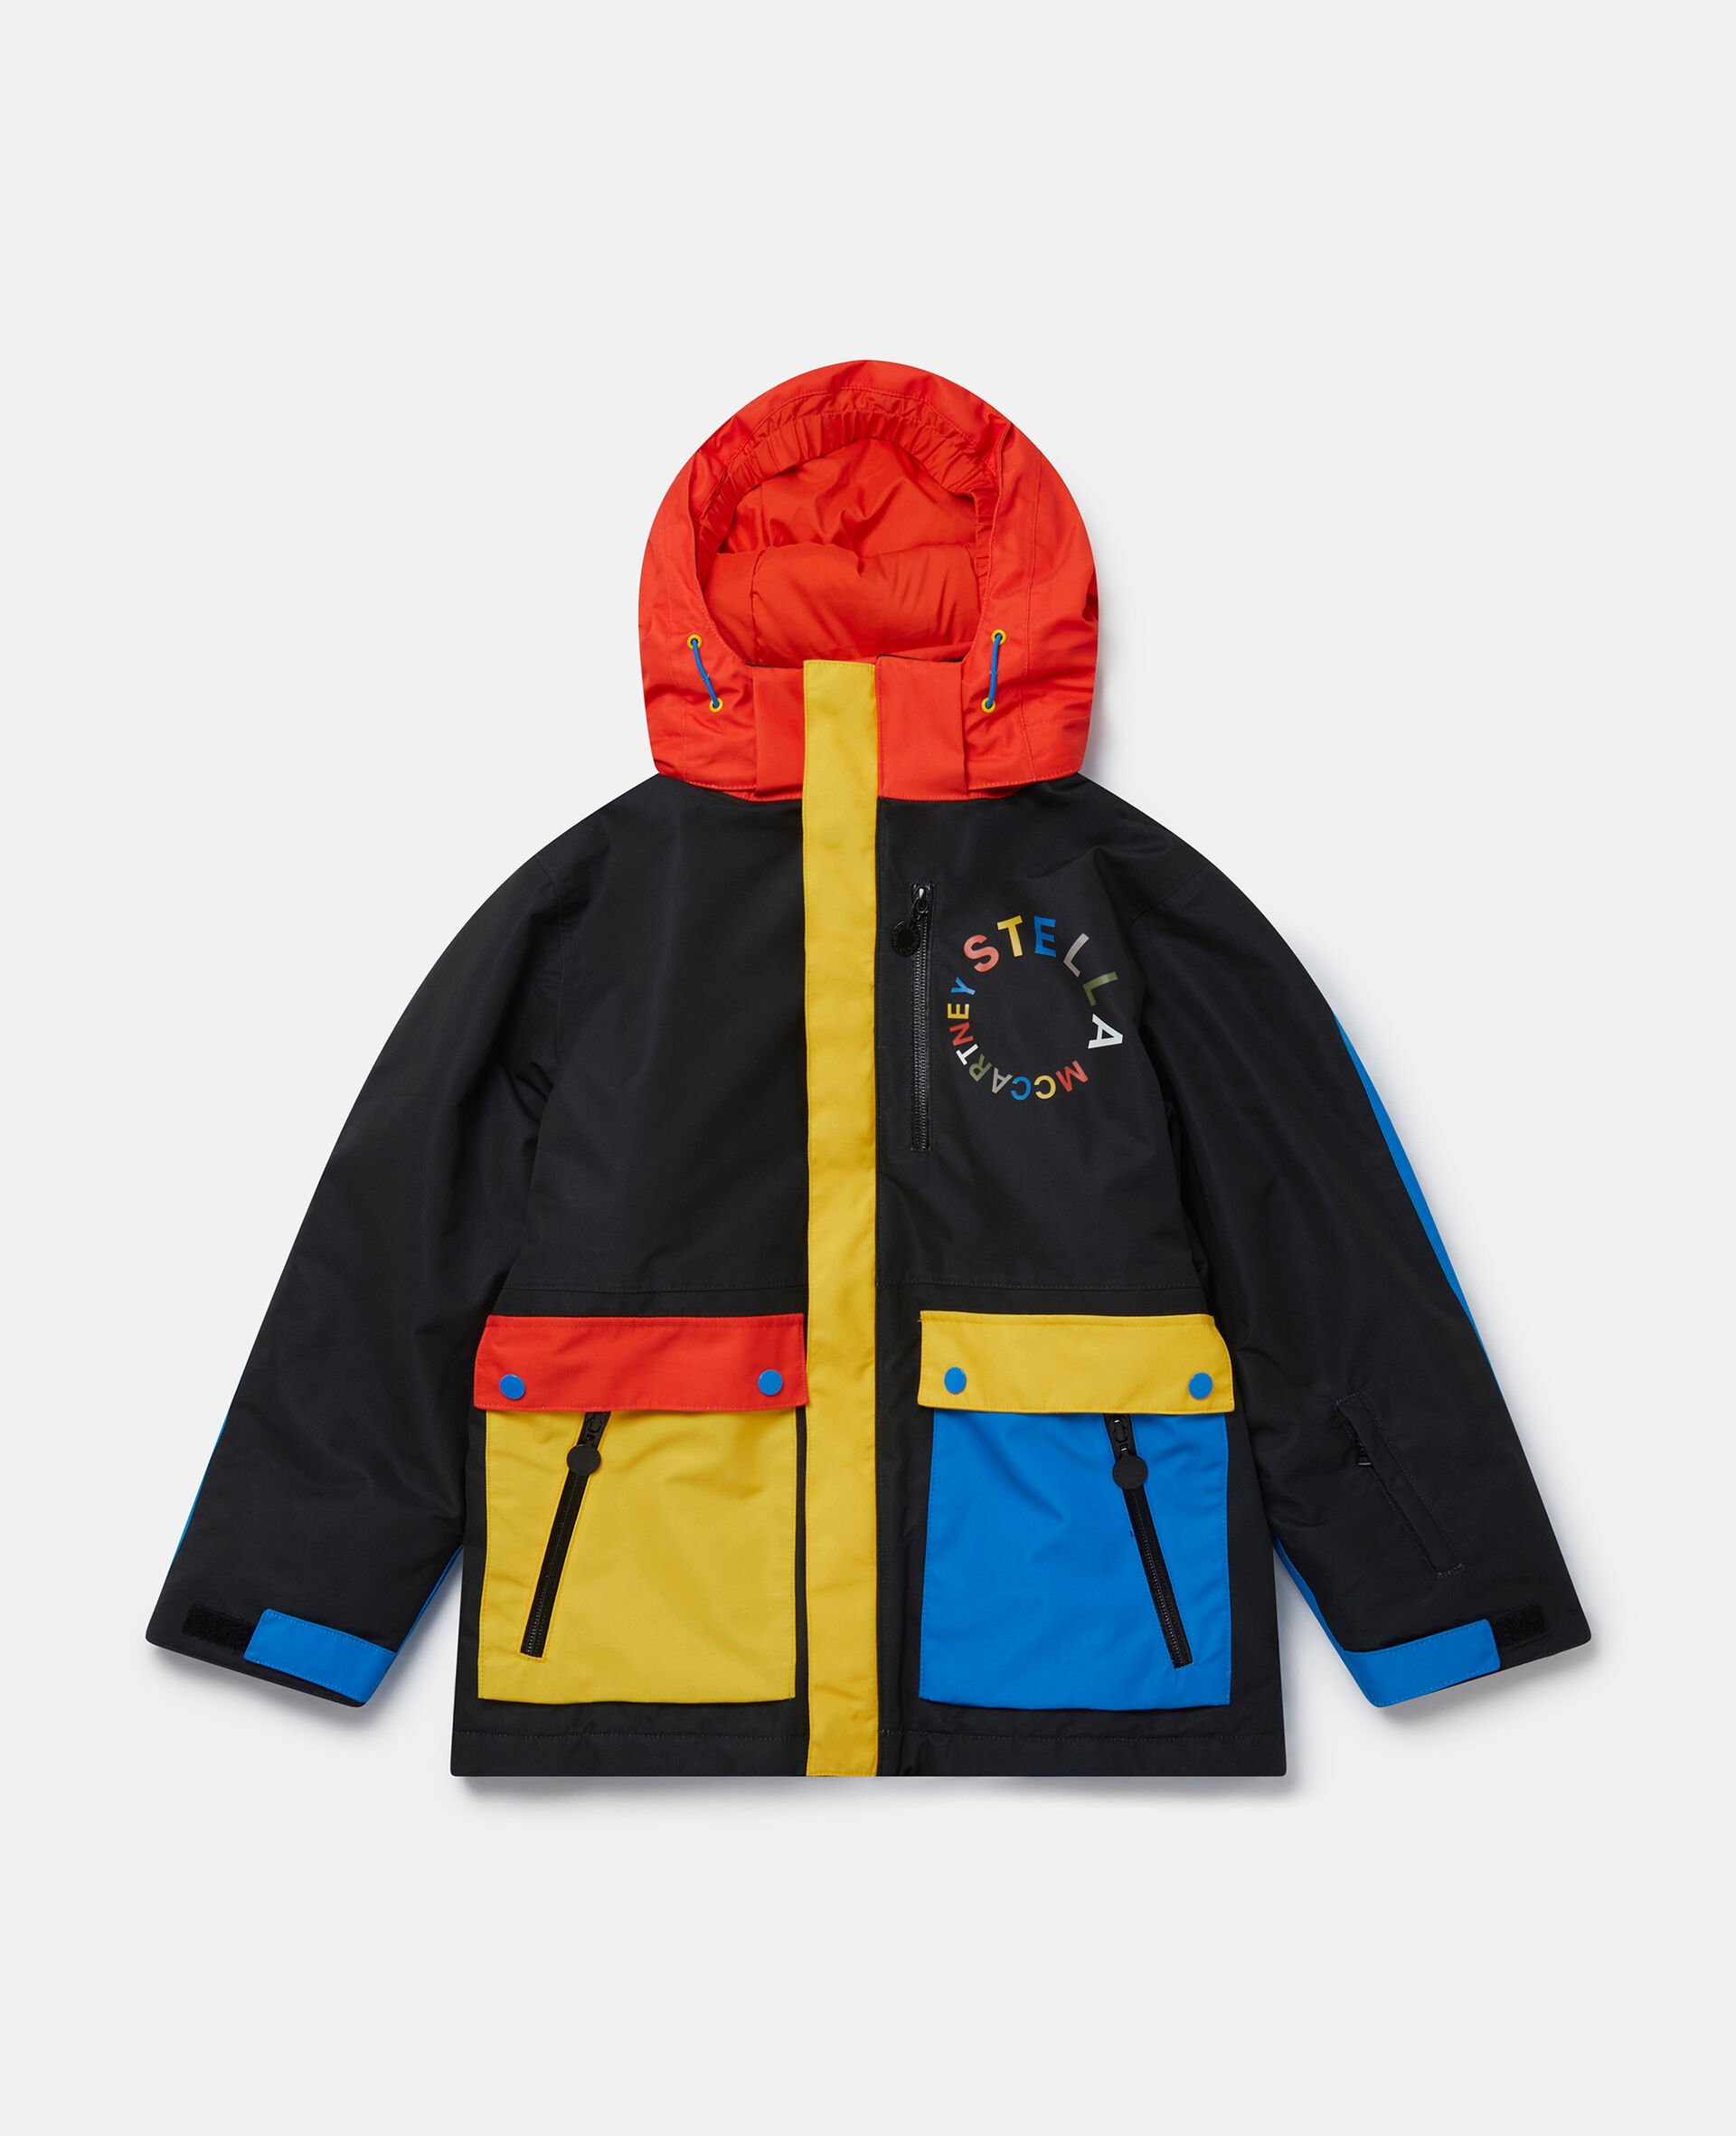 Veste de ski à capuche color block-Fantaisie-medium